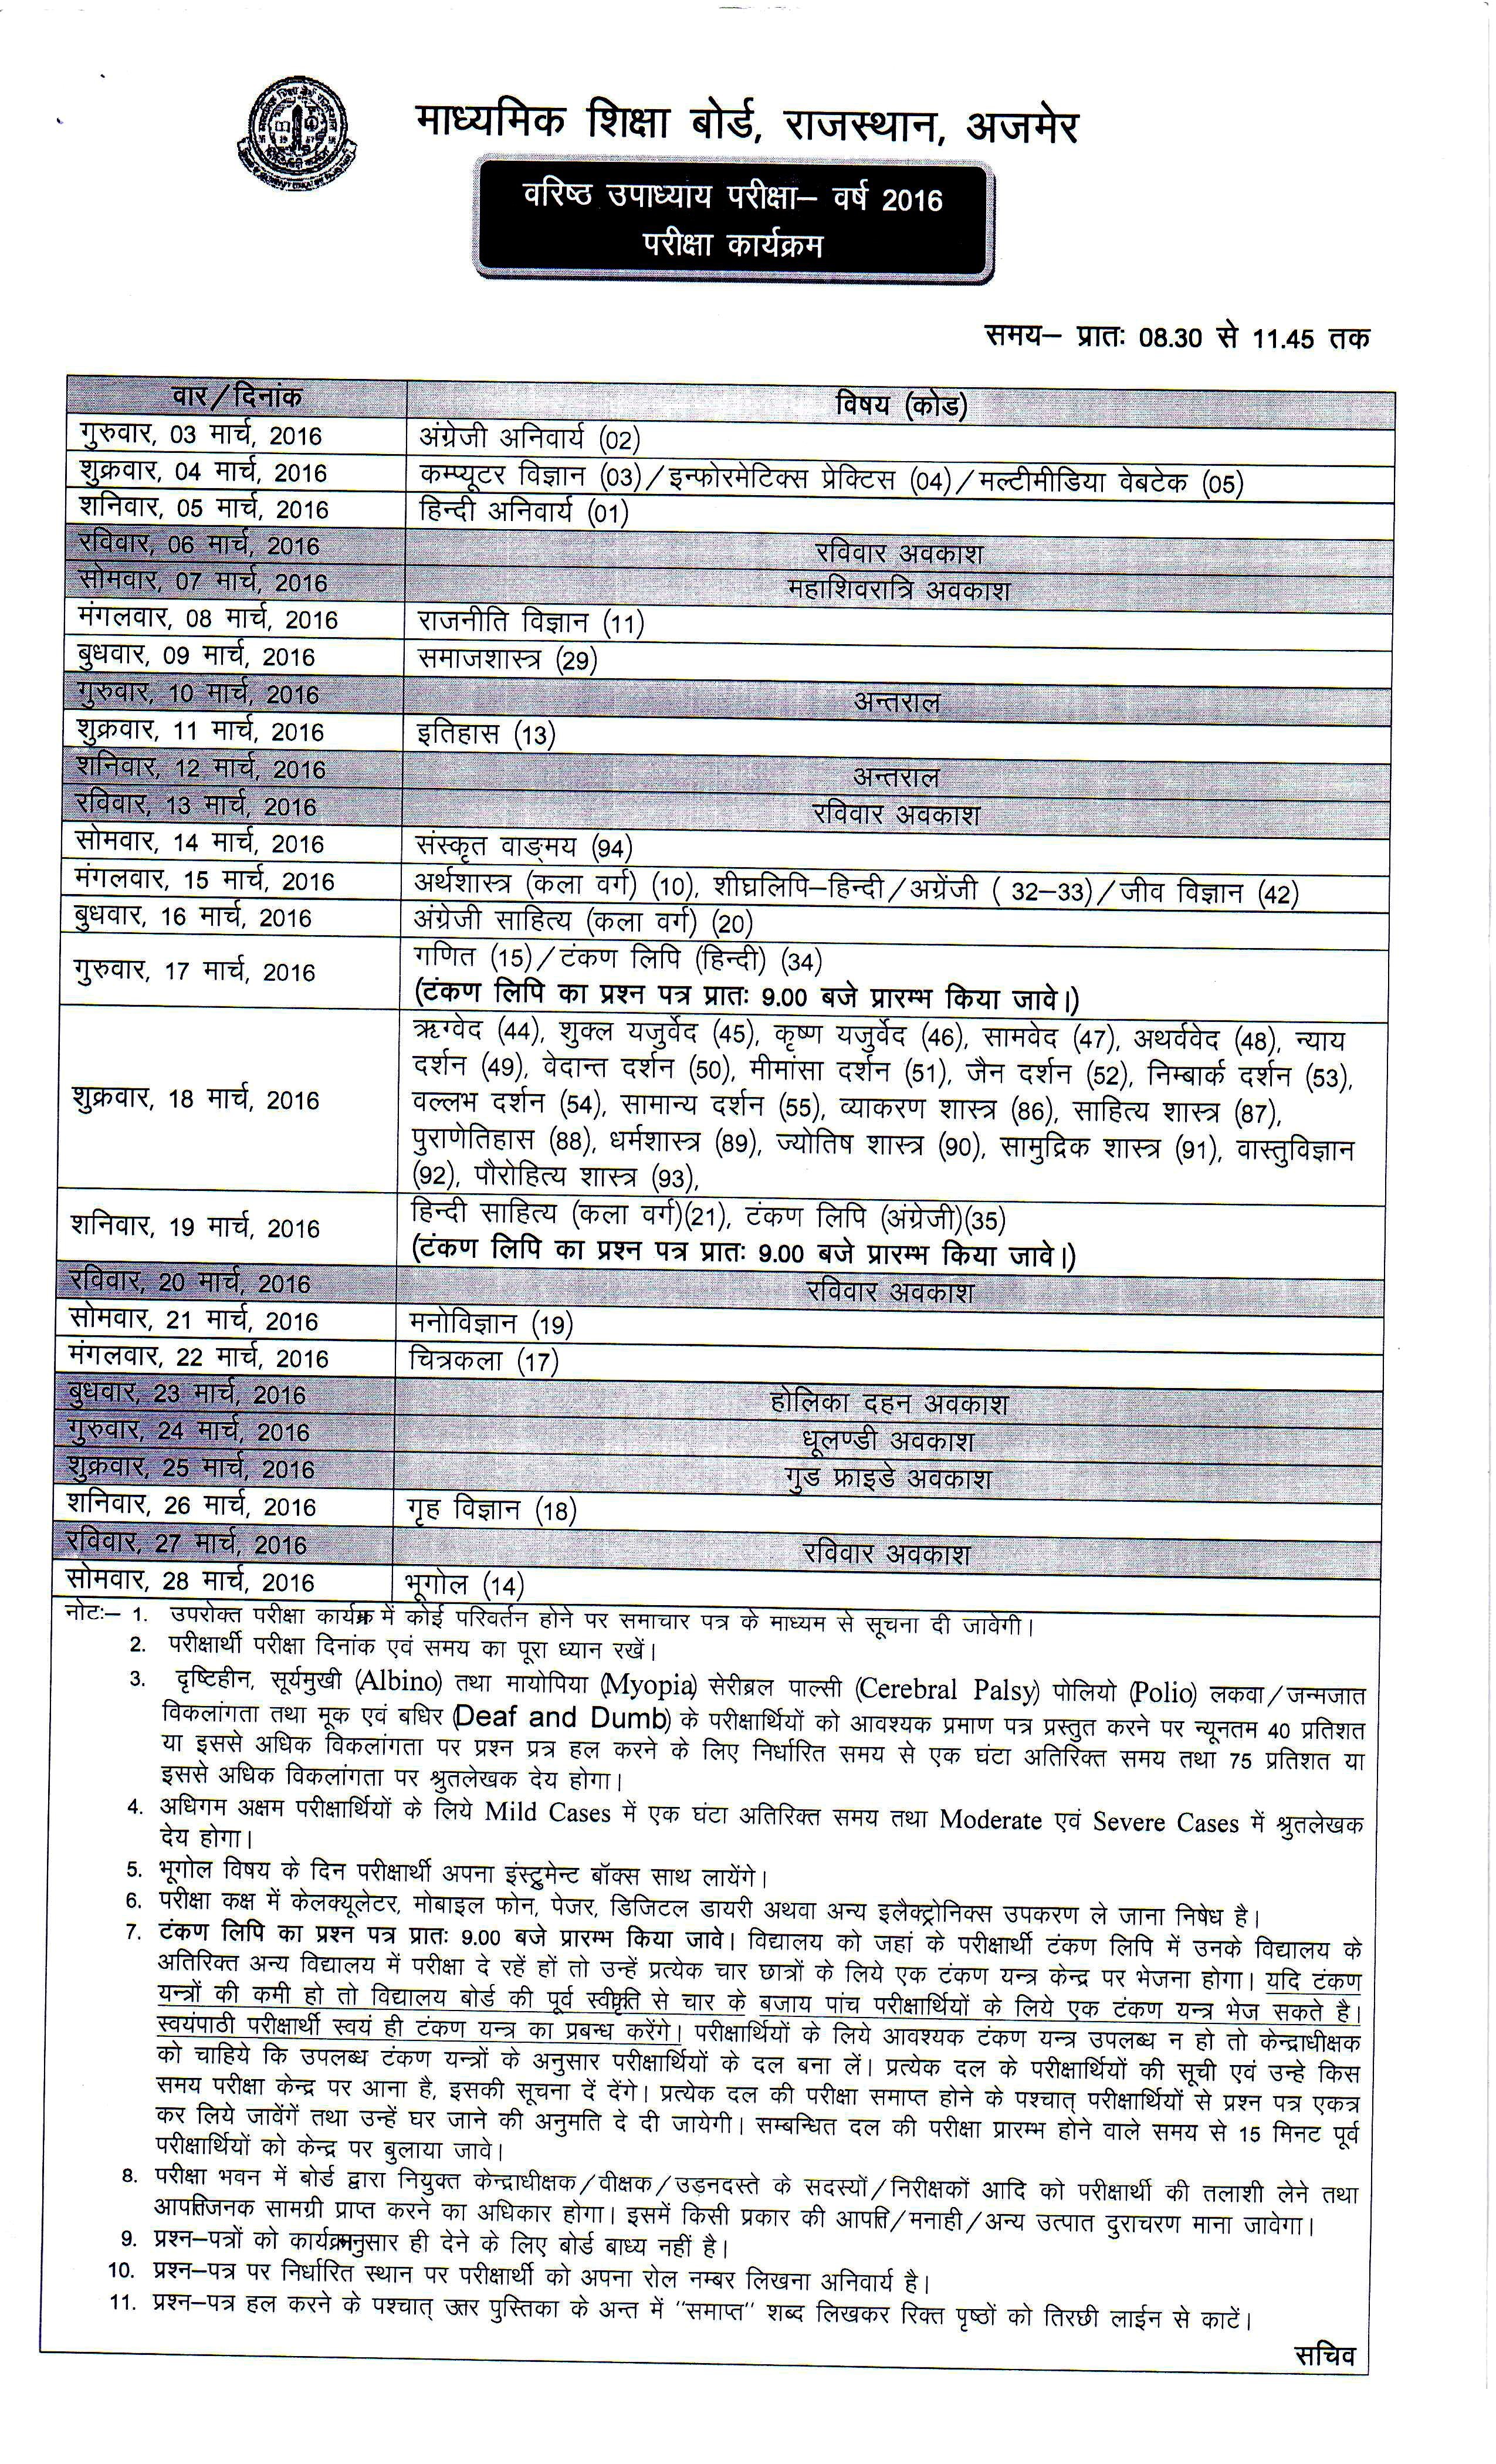 RajasthanTimetable Various Exams of BSER 2016 2